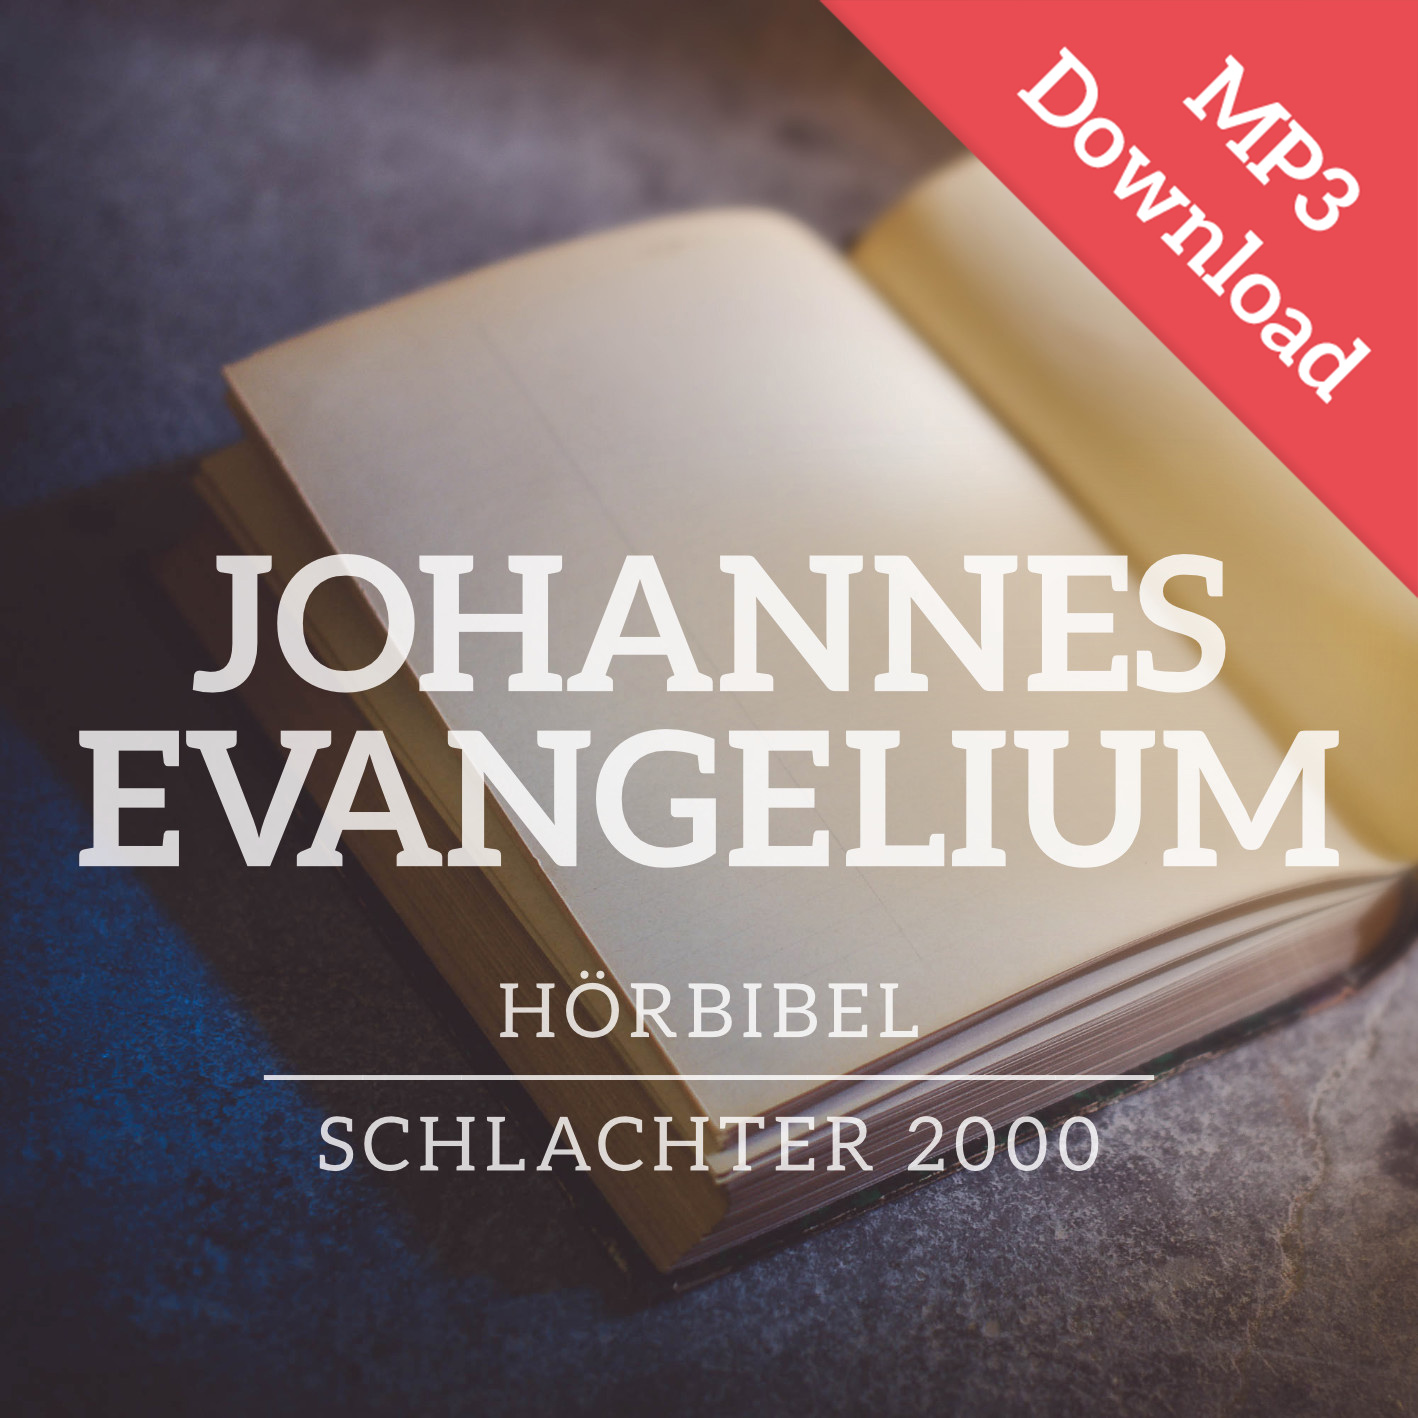 DOWNLOAD: Schlachter 2000 - Johannesevangelium - MP3 - Hörbibel